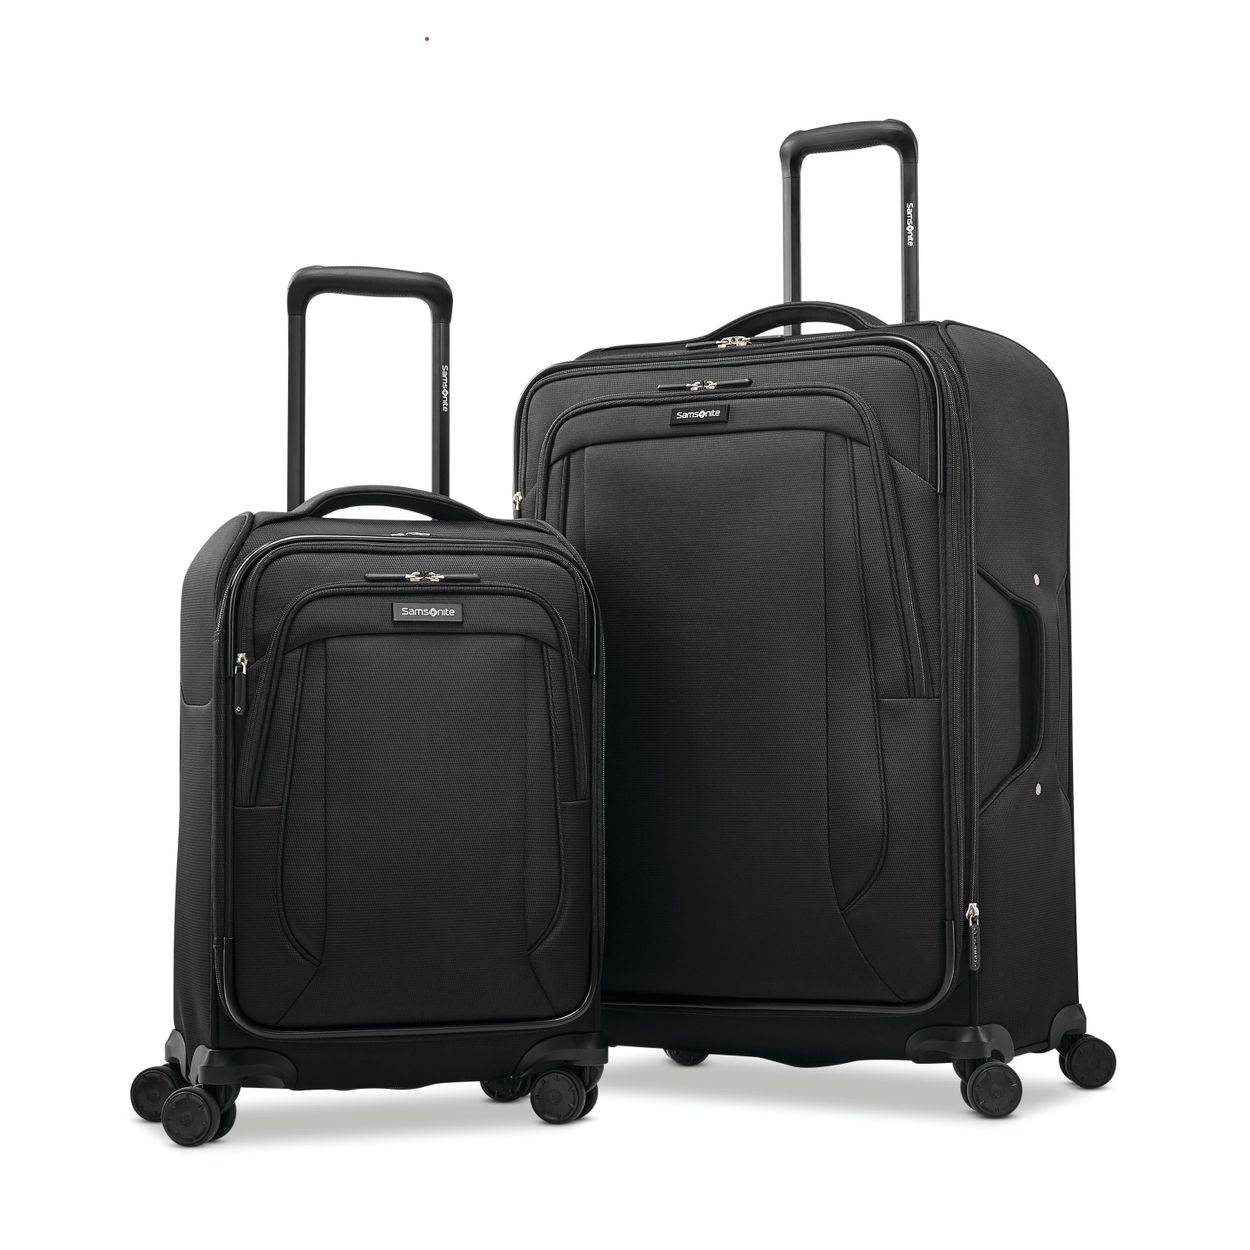 samsonite medium size luggage